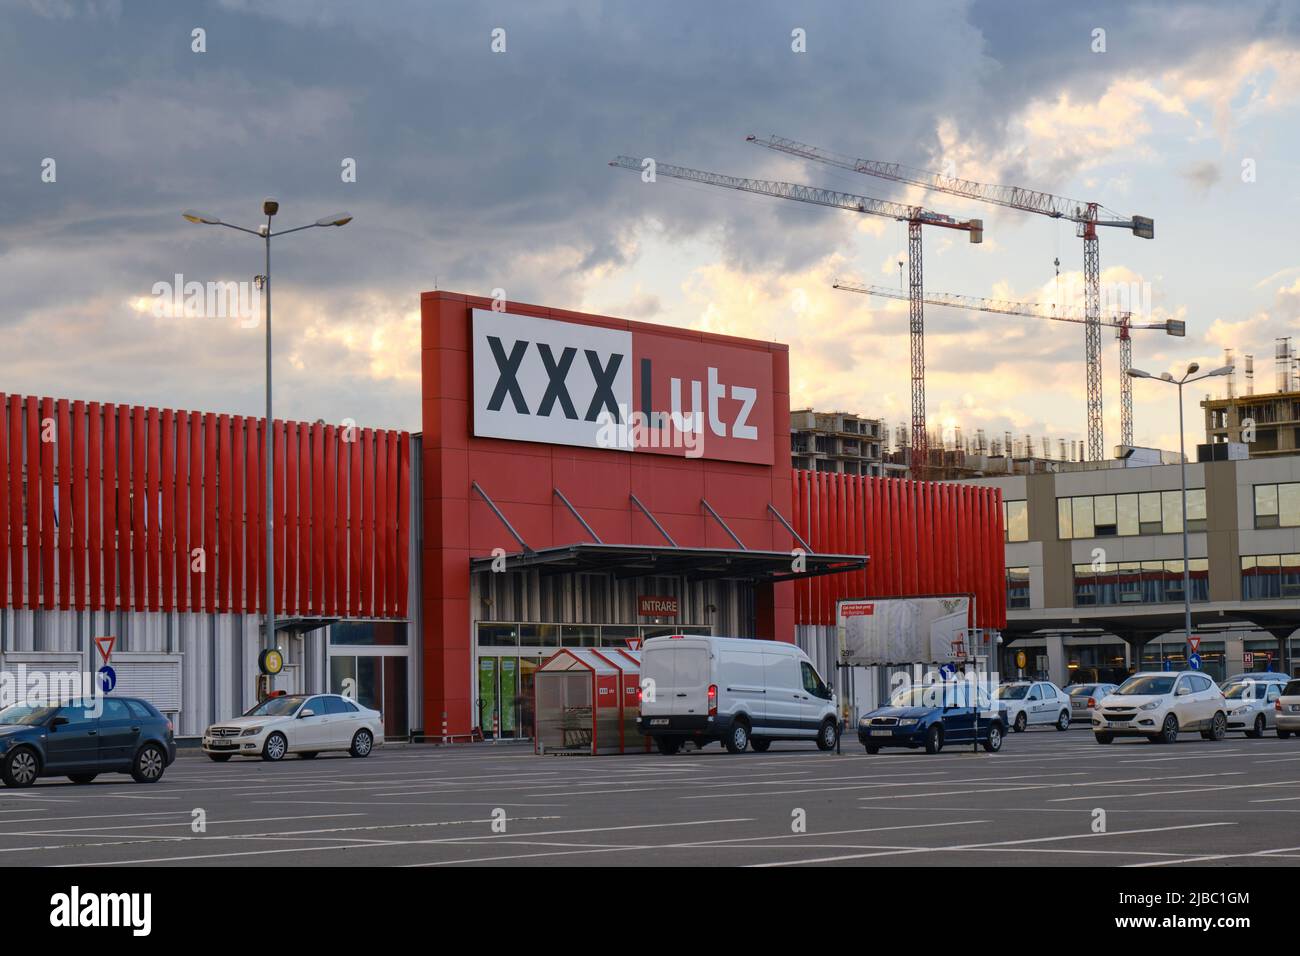 XXXLutz logo sign, parked cars and evening clouds. XXXLutz Group is an Austrian furniture store chain with headquarters in Austria. Bucharest, Romania Stock Photo